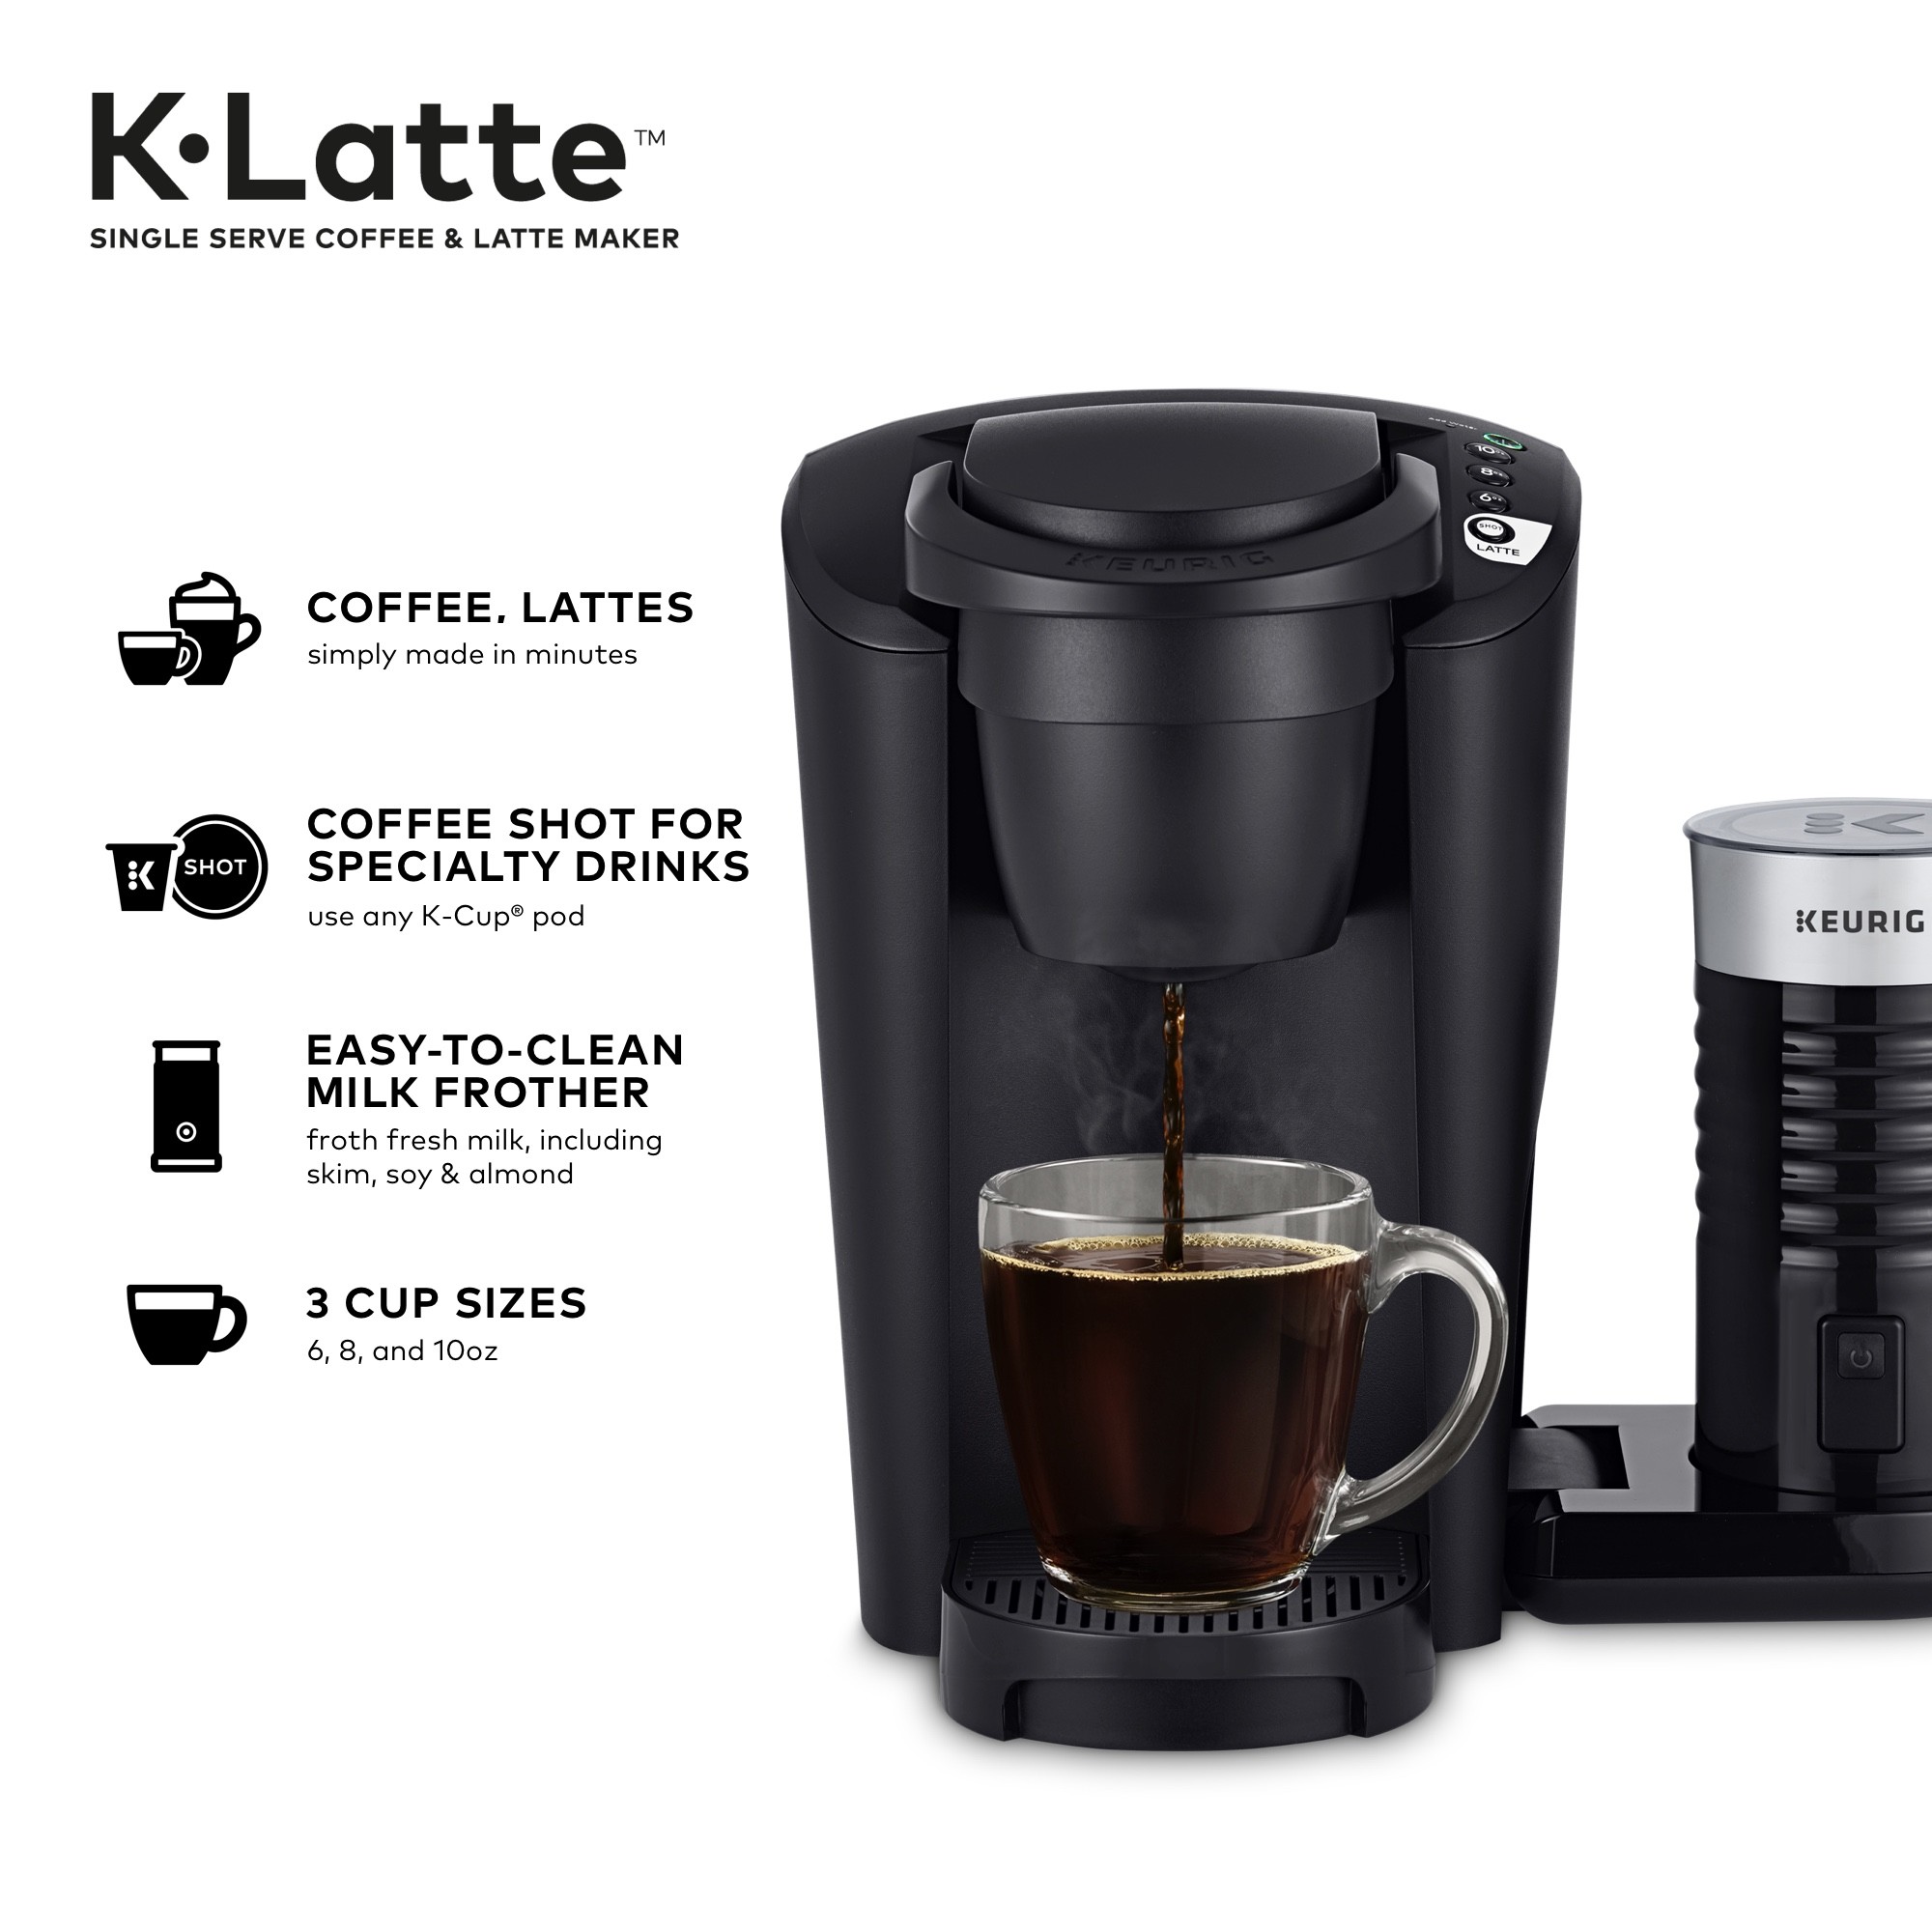 Keurig K-Latte Single Serve K-Cup Coffee and Latte Maker, Black - image 2 of 12